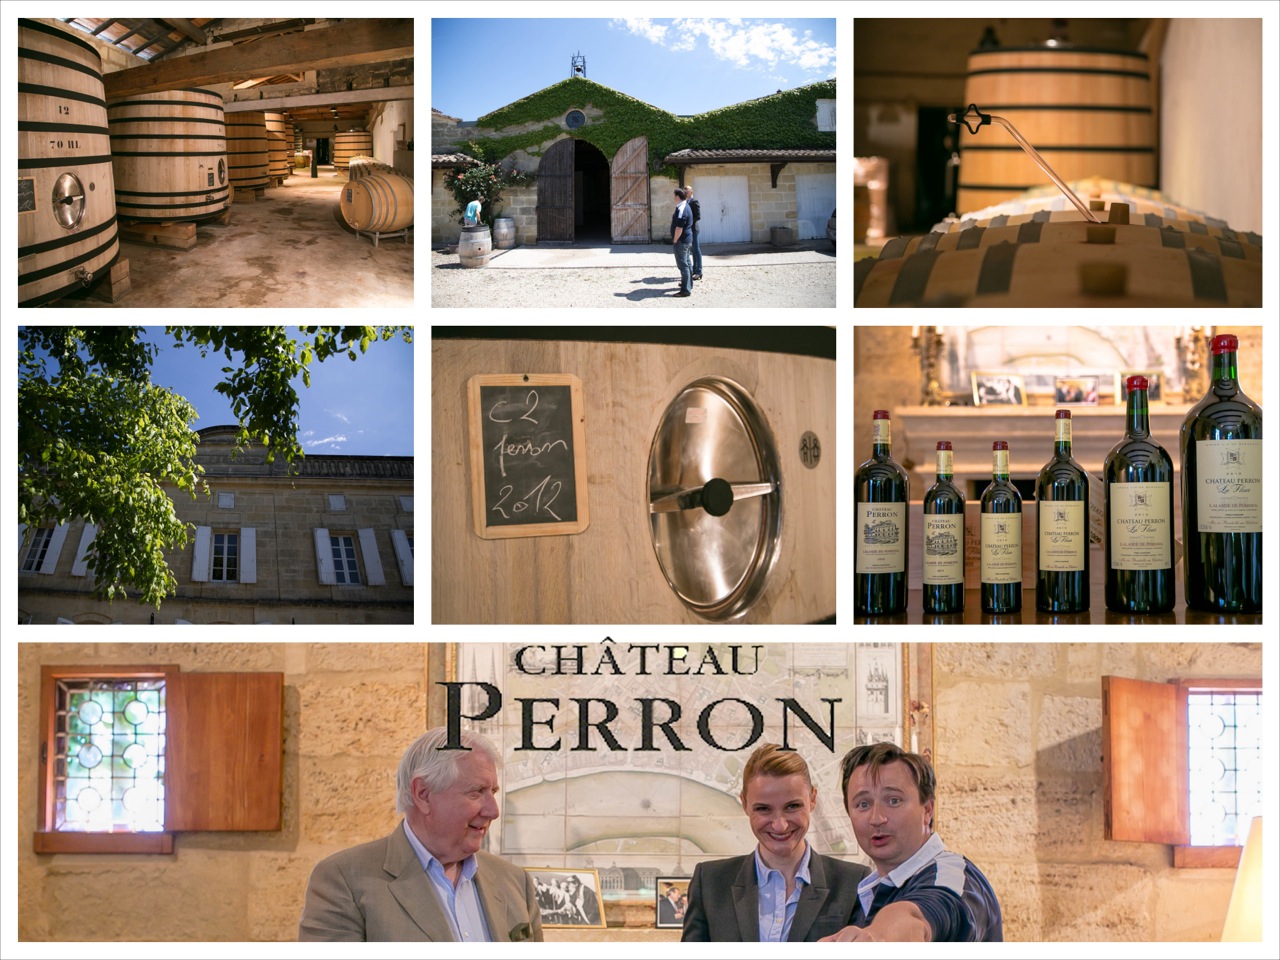 Château Perron AOC Lalande de Pomerol Rouge 2018